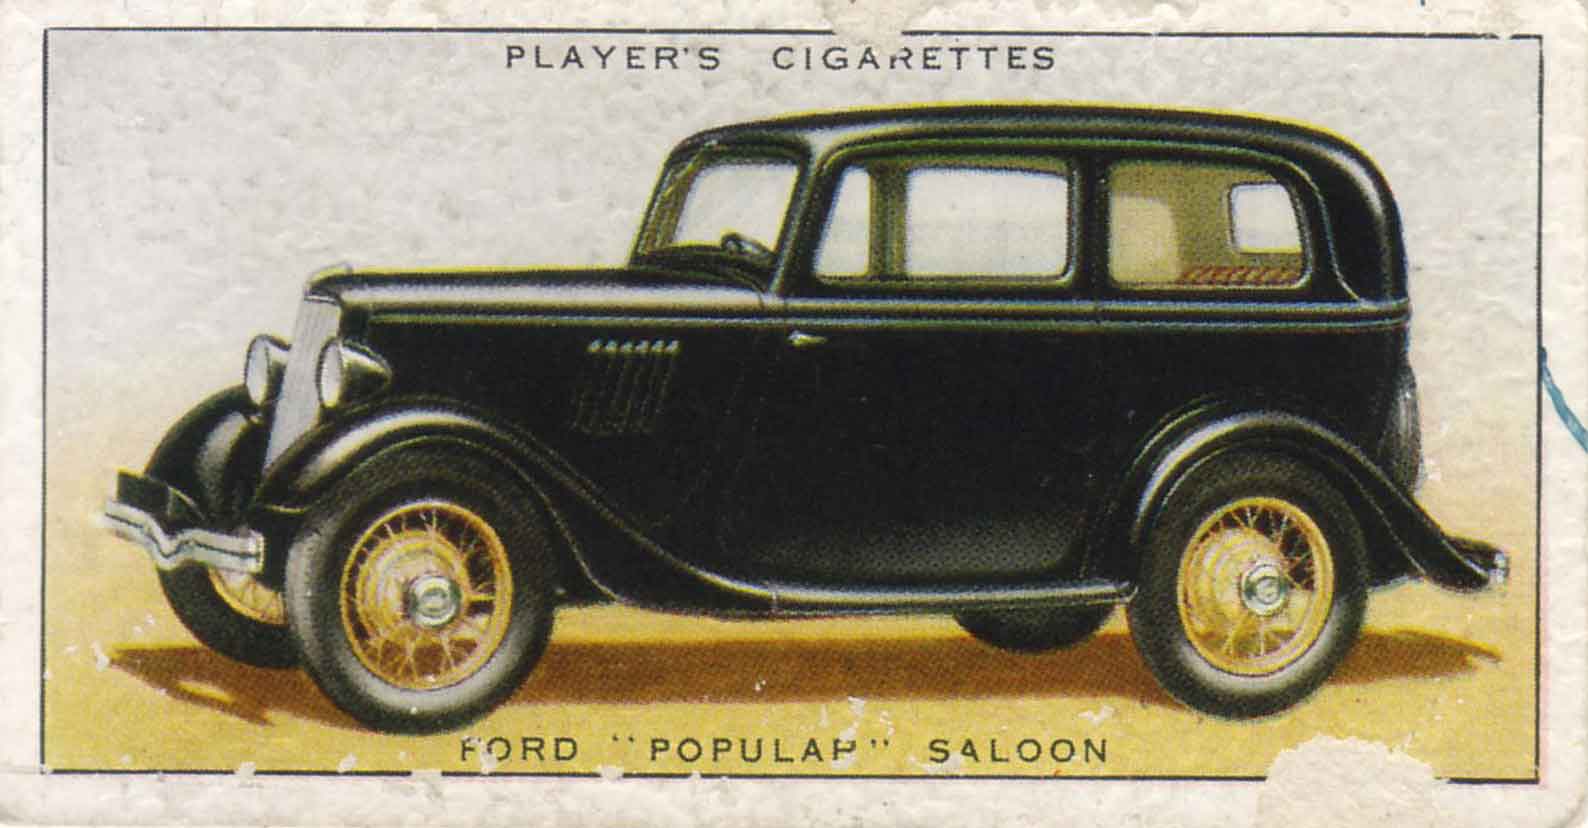 Ford "Popular" Saloon. 1937 cigarette card.